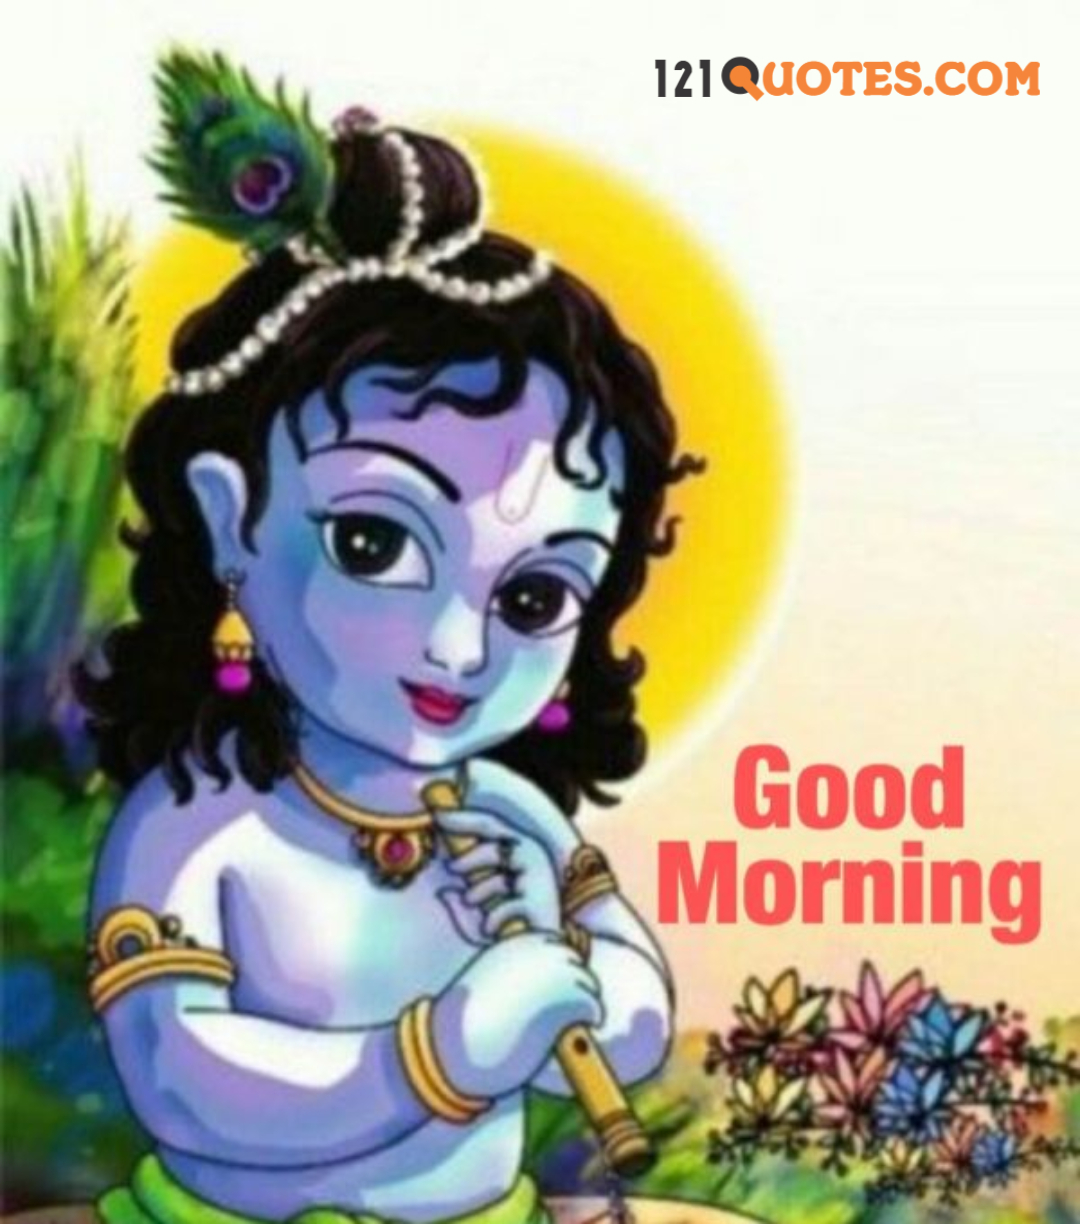 bal krishna morning greetings quotes pic 